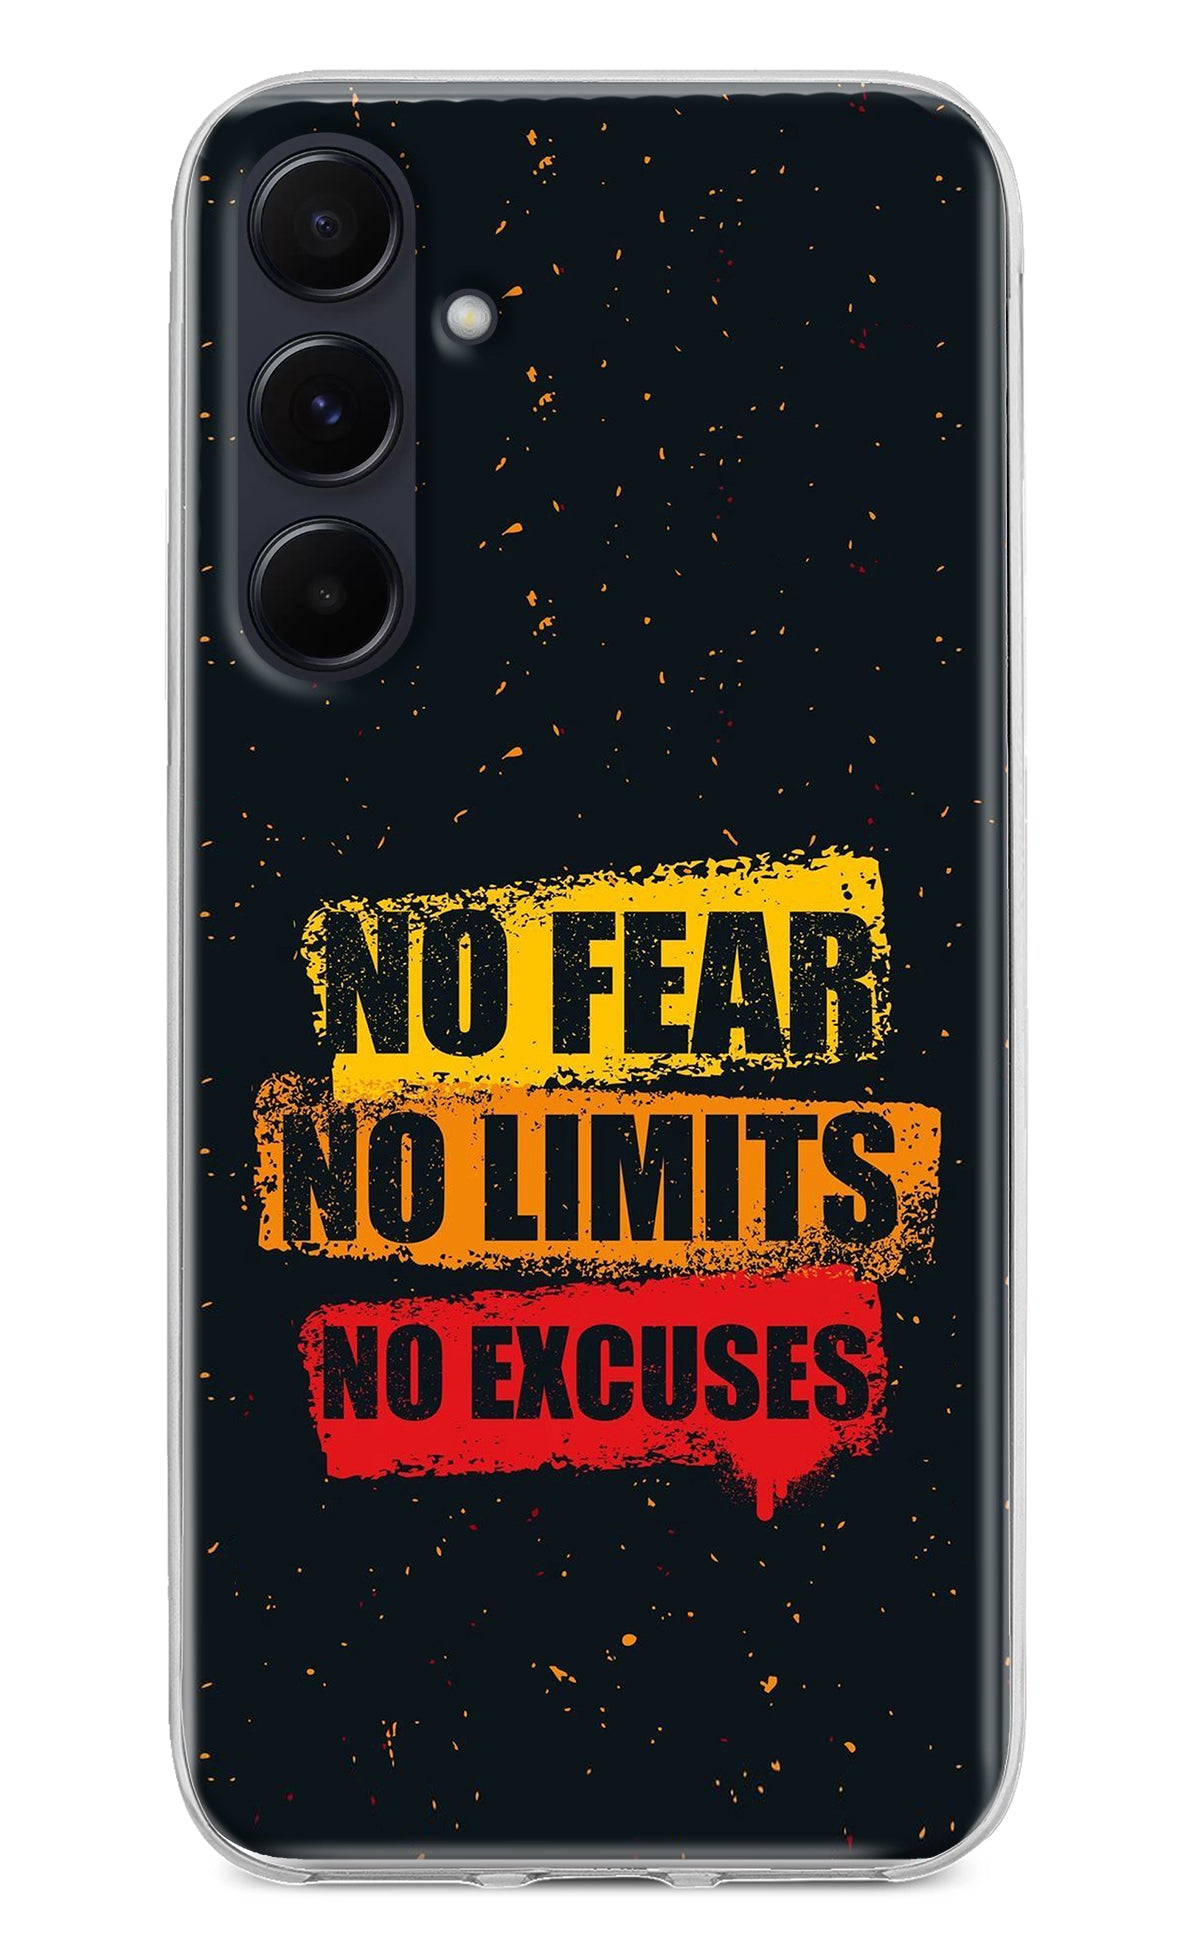 No Fear No Limits No Excuse Samsung A55 5G Back Cover